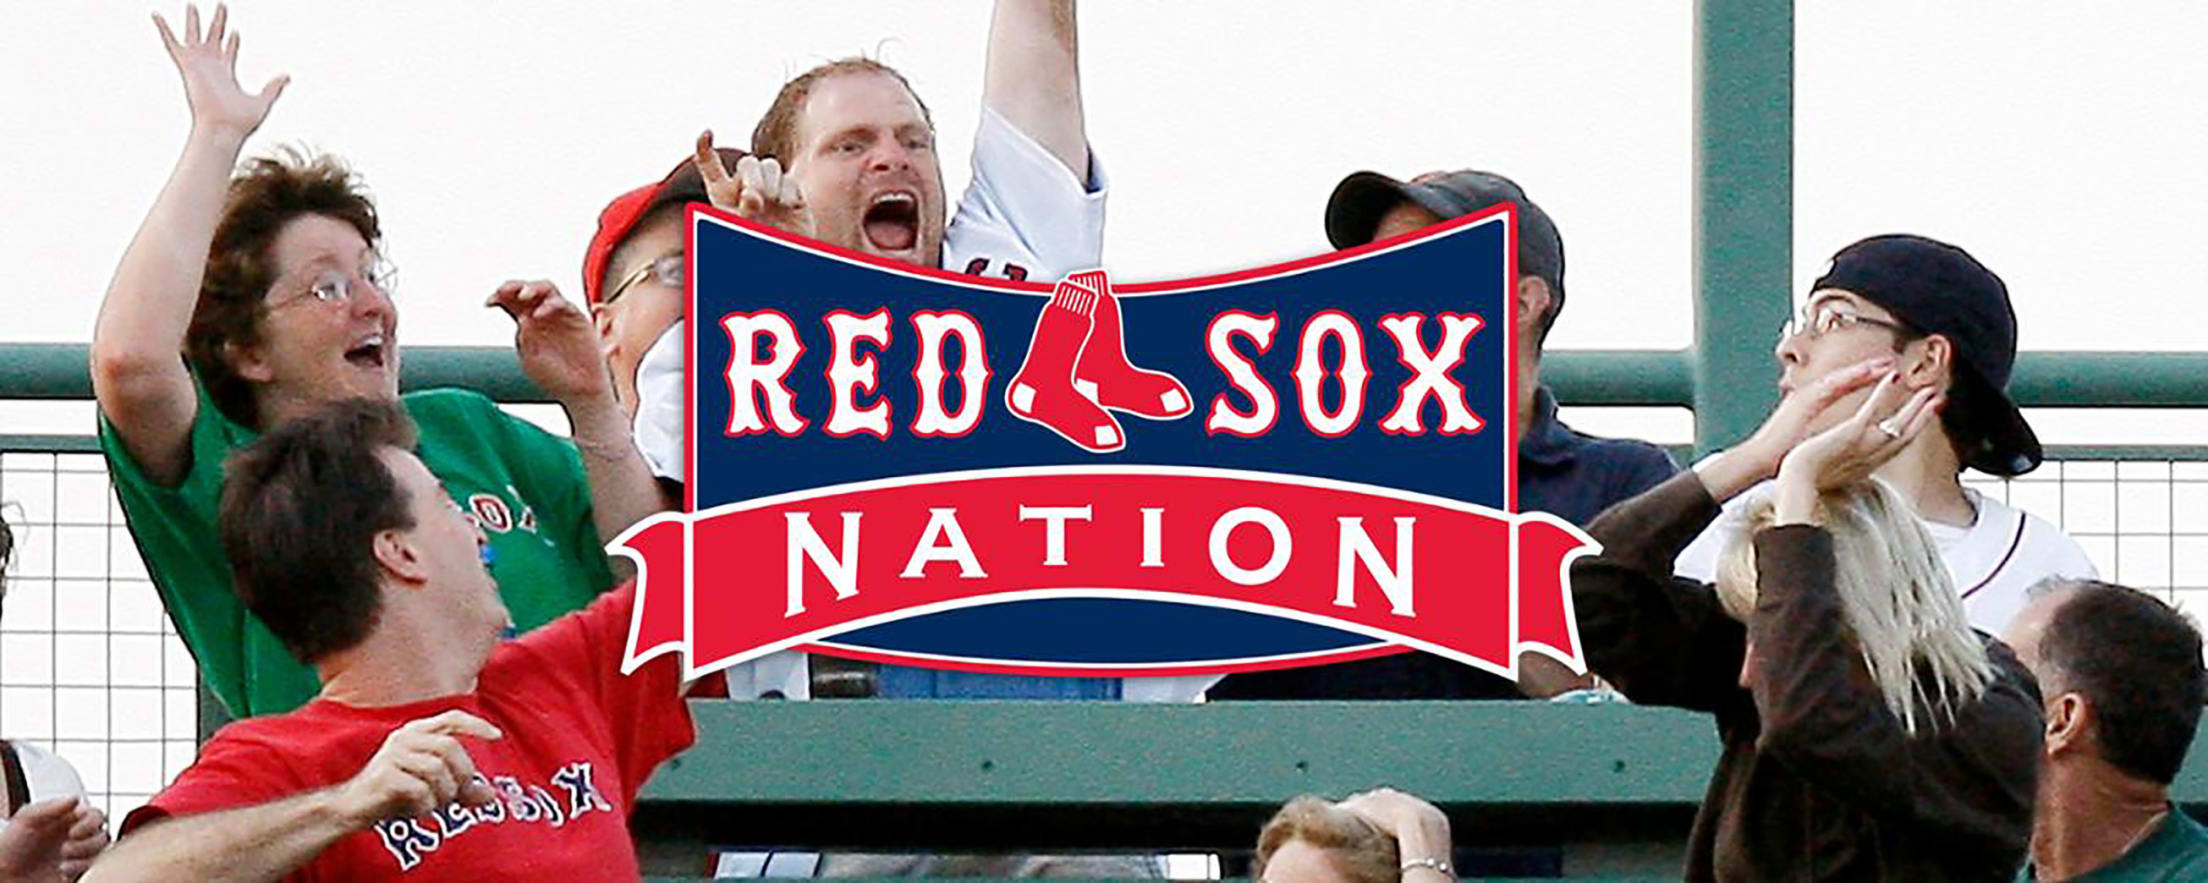 Red Sox History  Red sox, Red sox nation, Red sox baseball